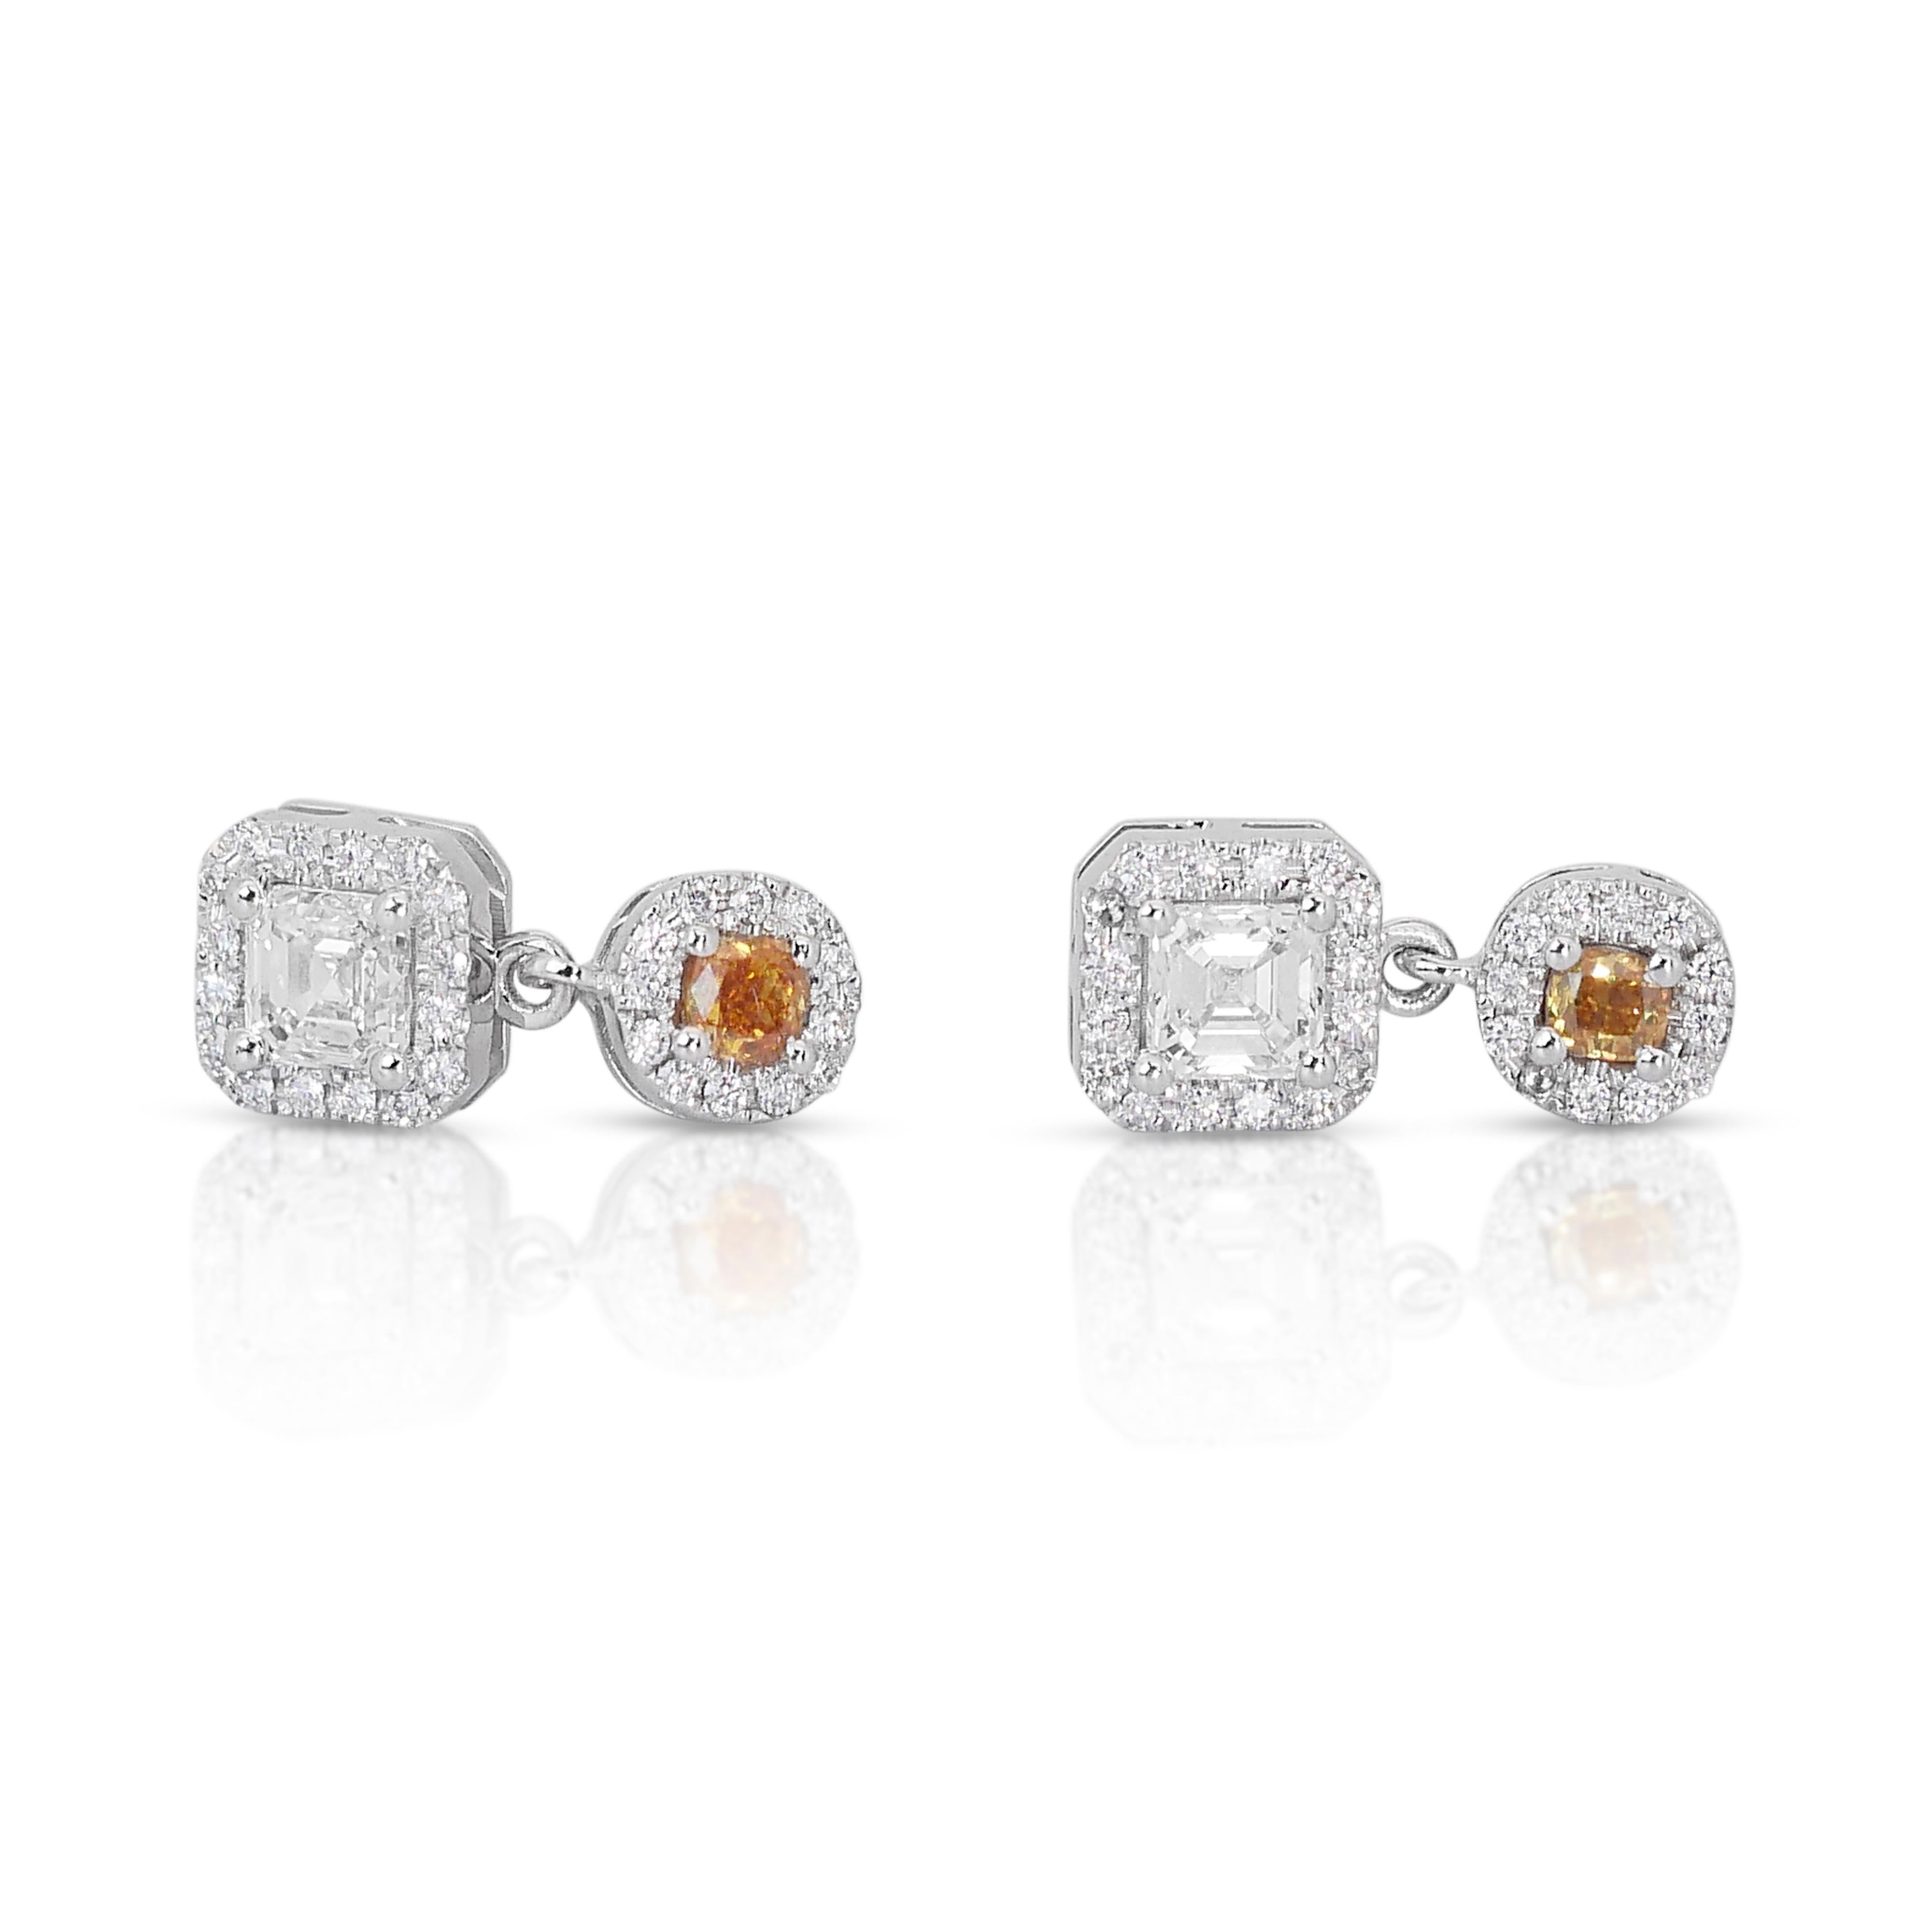 Captivating 1.27ct Diamonds Drop Earrings in 14k White Gold - IGI Certified 1